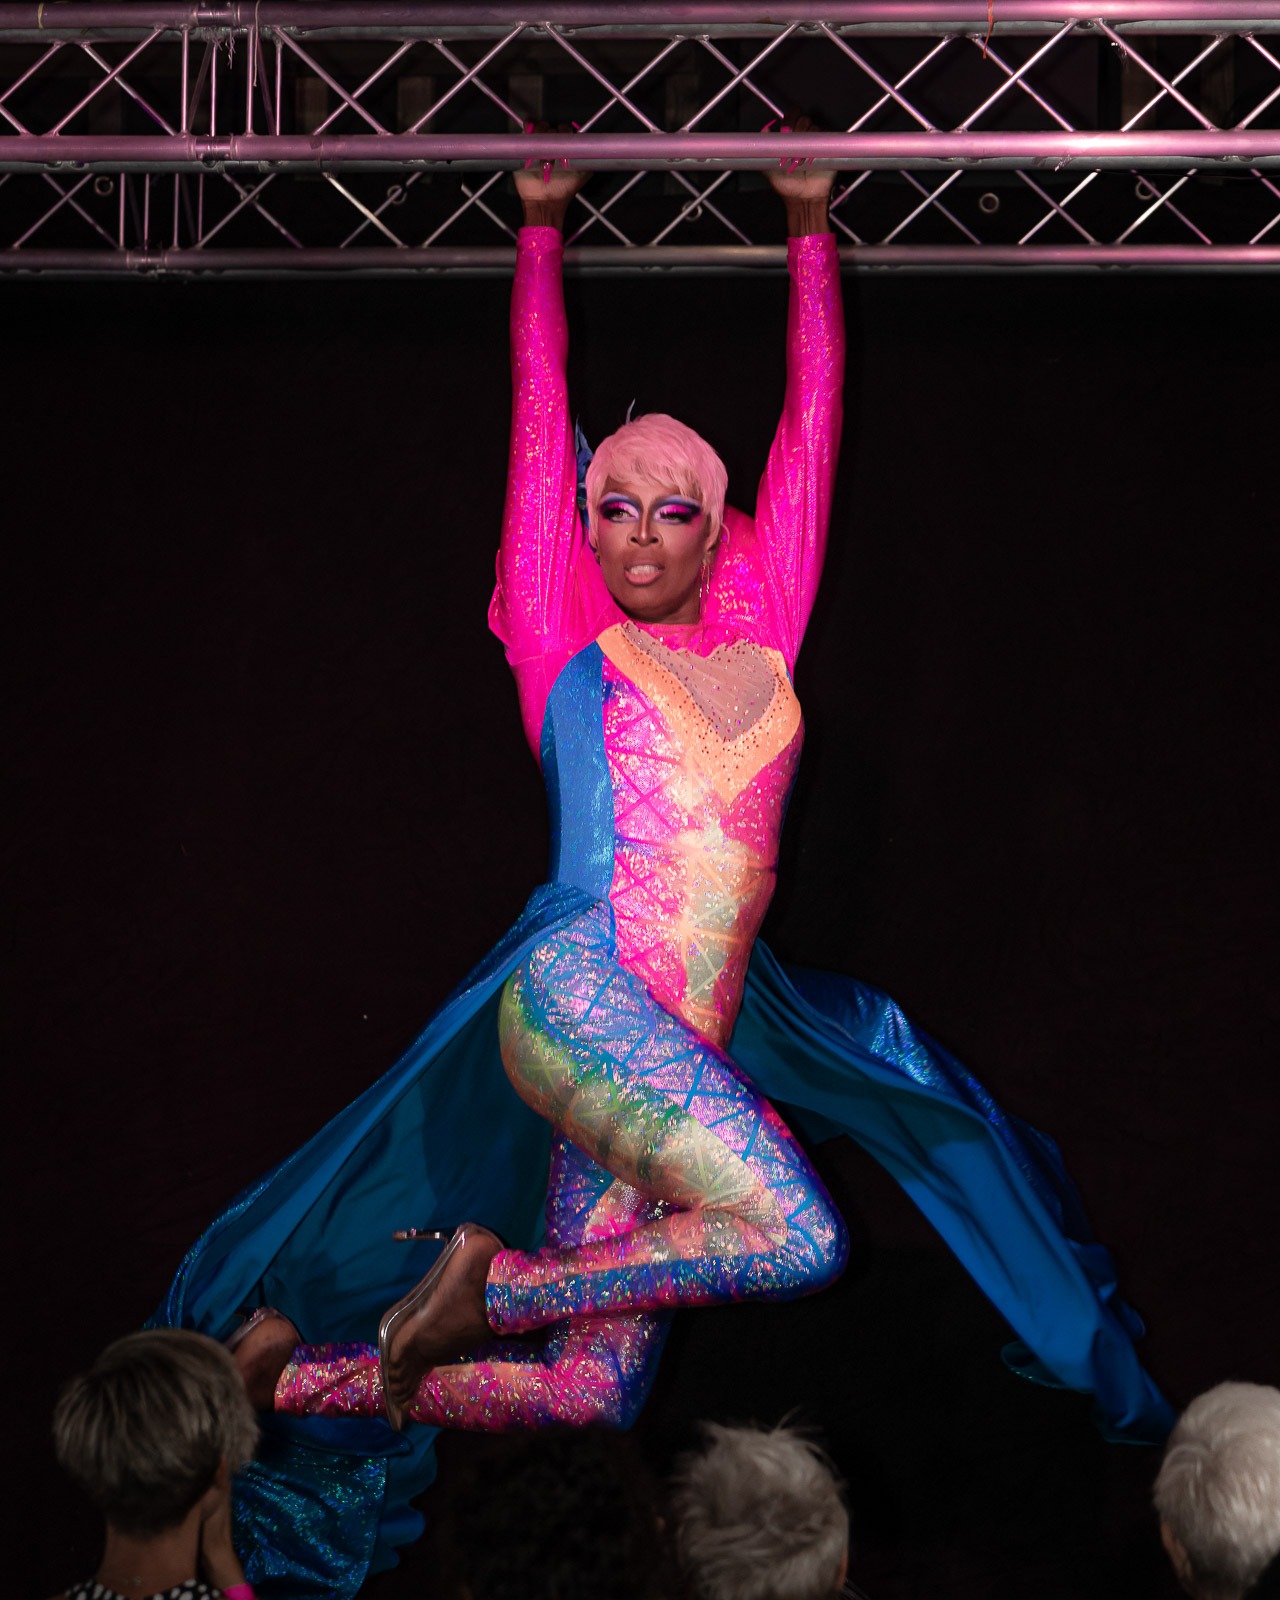 Night Queens Travestie Show Variete Drag Revue Termin Karten Ticket festival event frankfurt